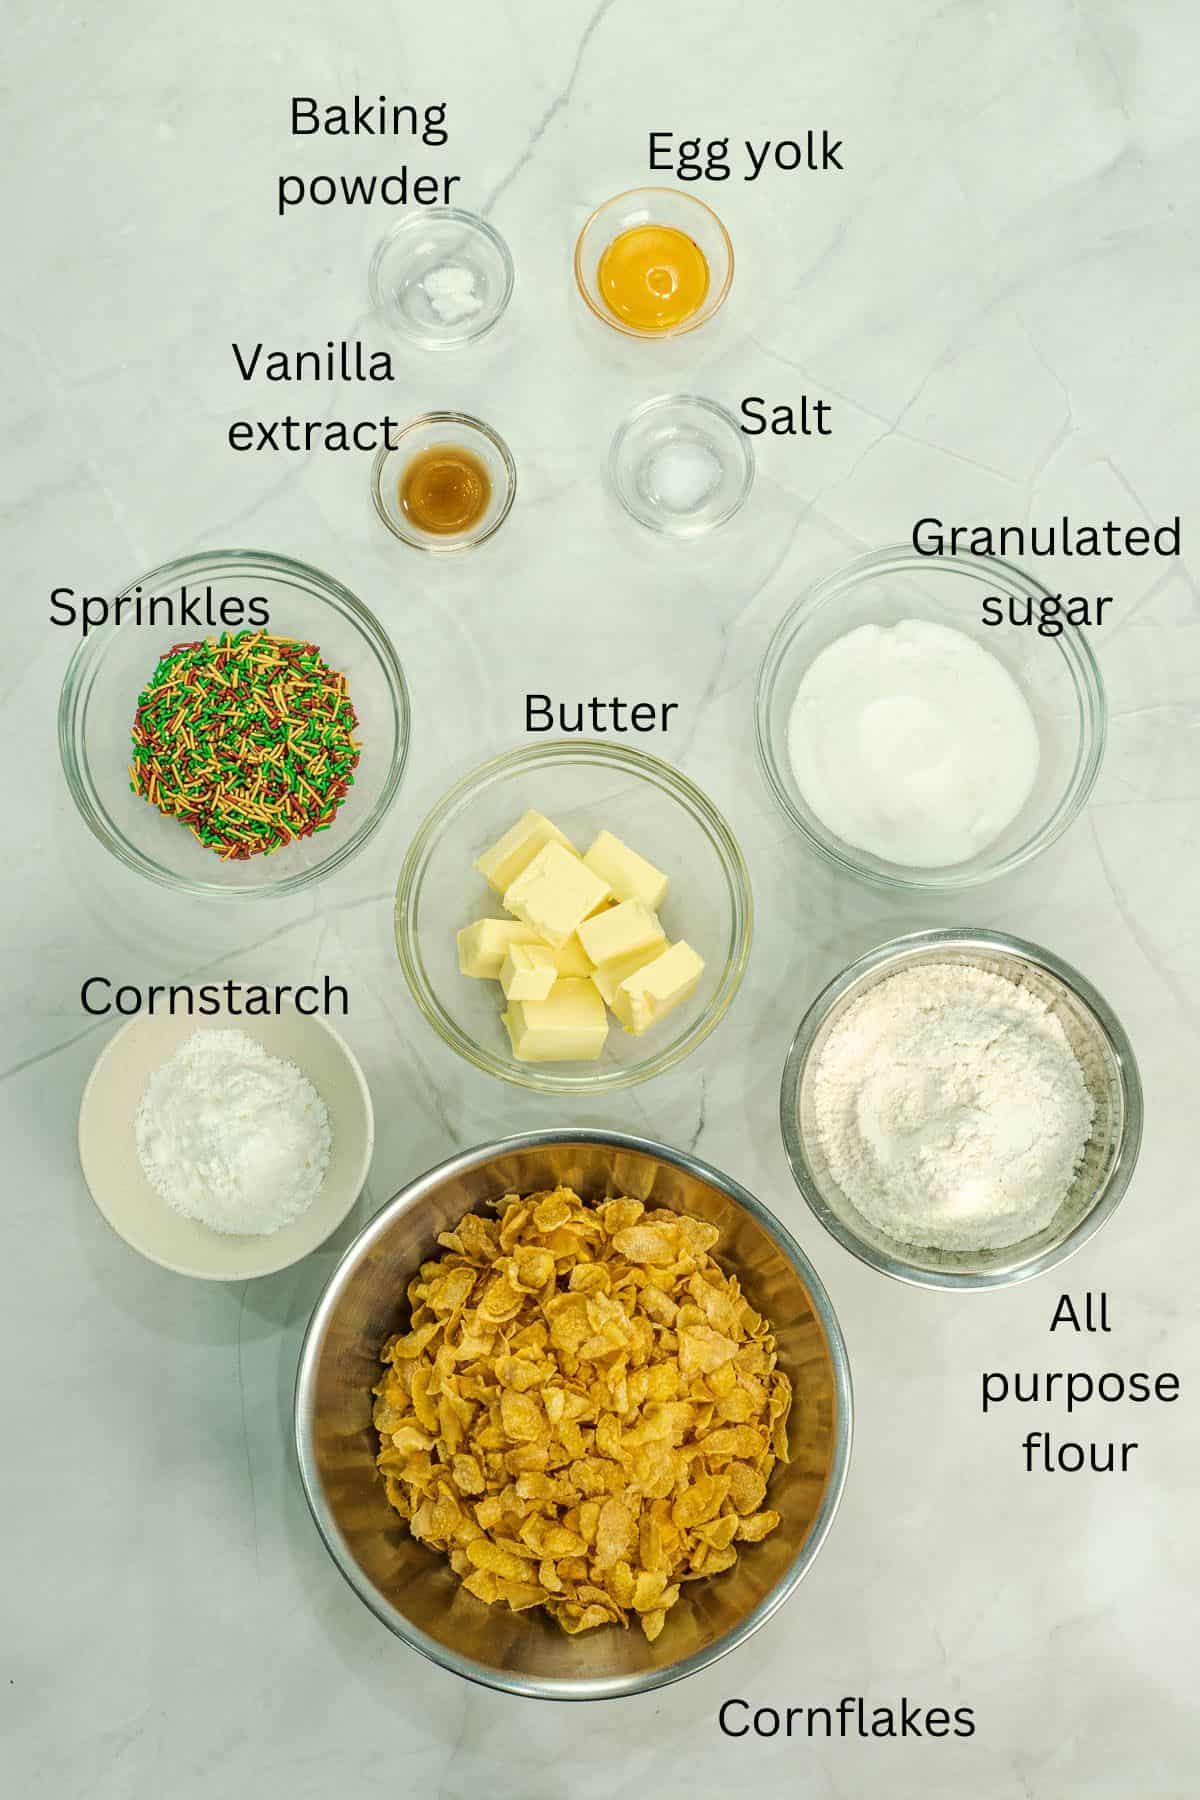 Cornflakes, cornstarch, flour, butter, sugar, sprinkles, vanilla, salt, baking powder and egg yolk in bowls against a marble background.